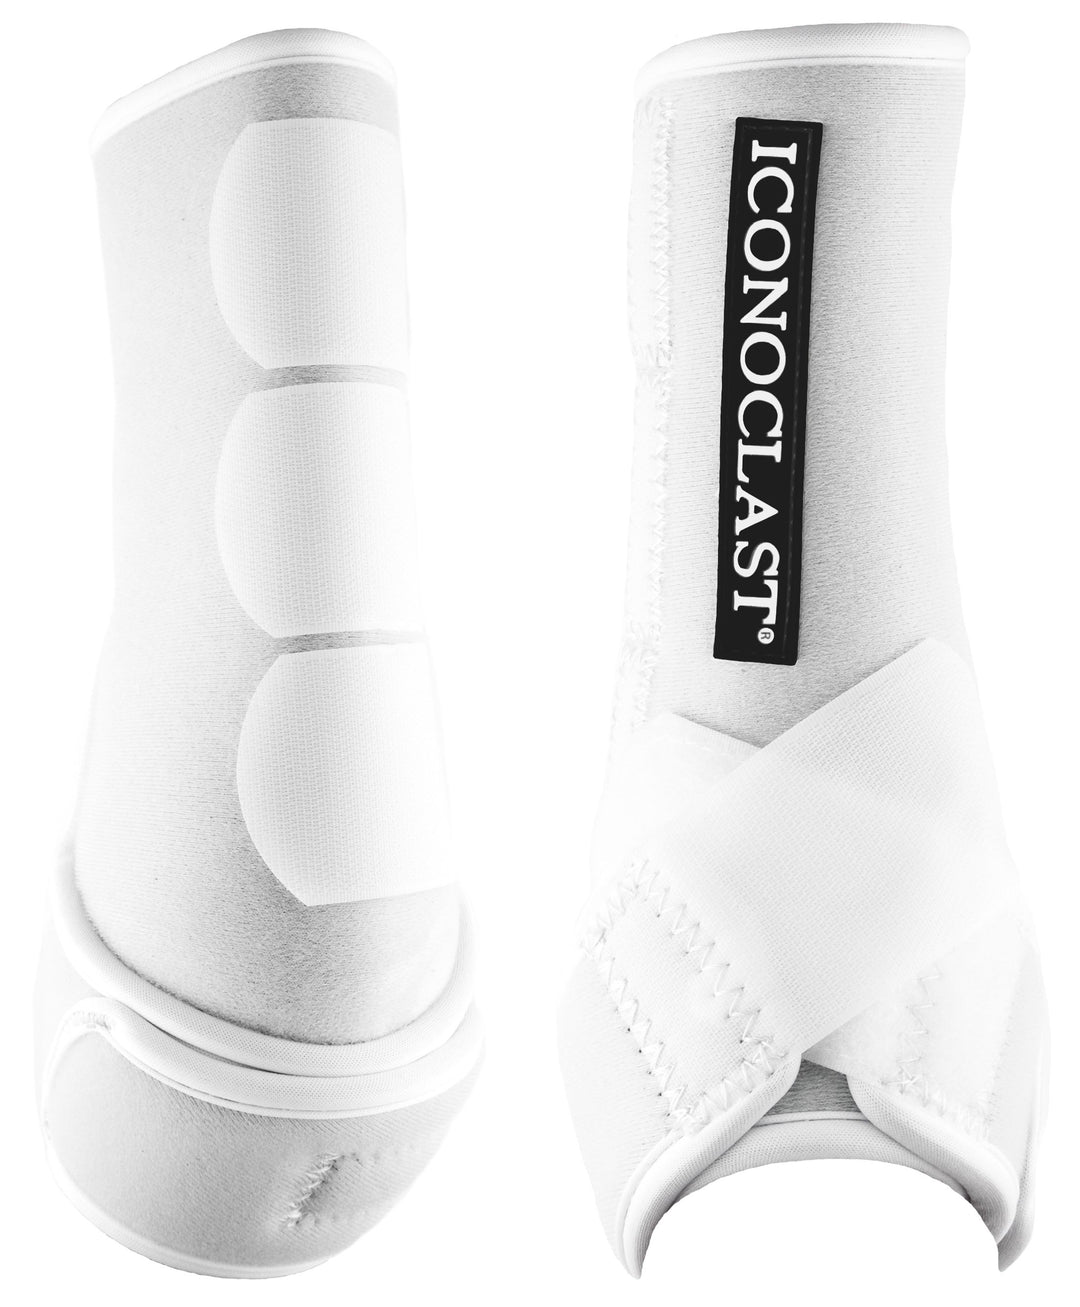 Iconoclast White Front Orthopedic Boot